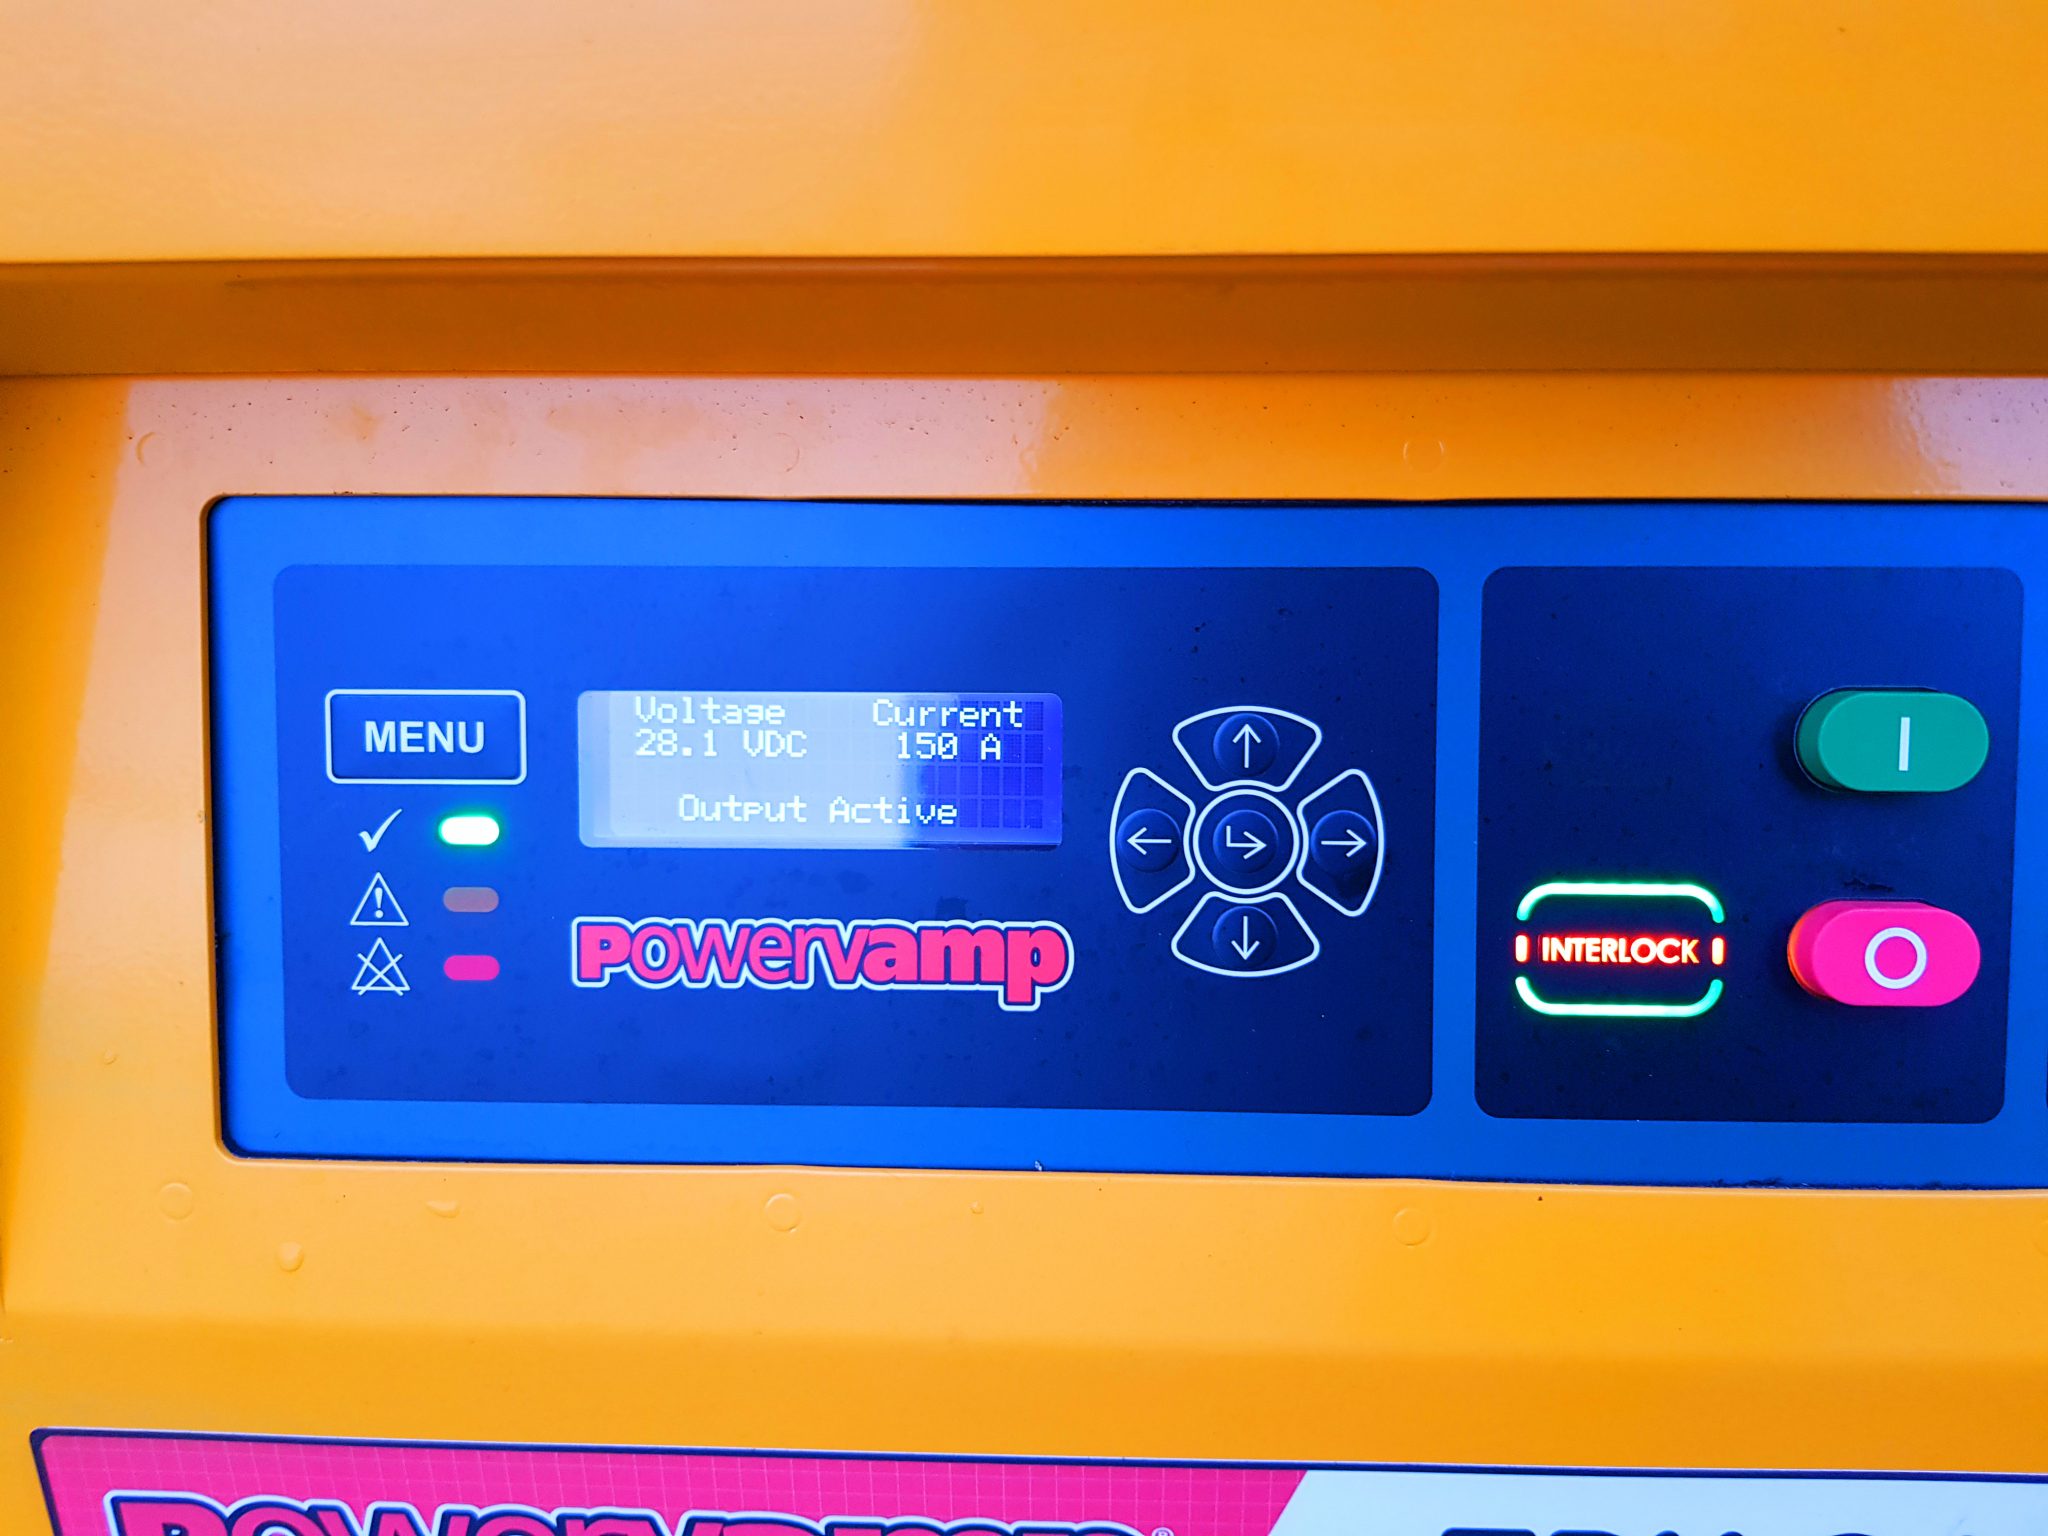 Powervamp control panel